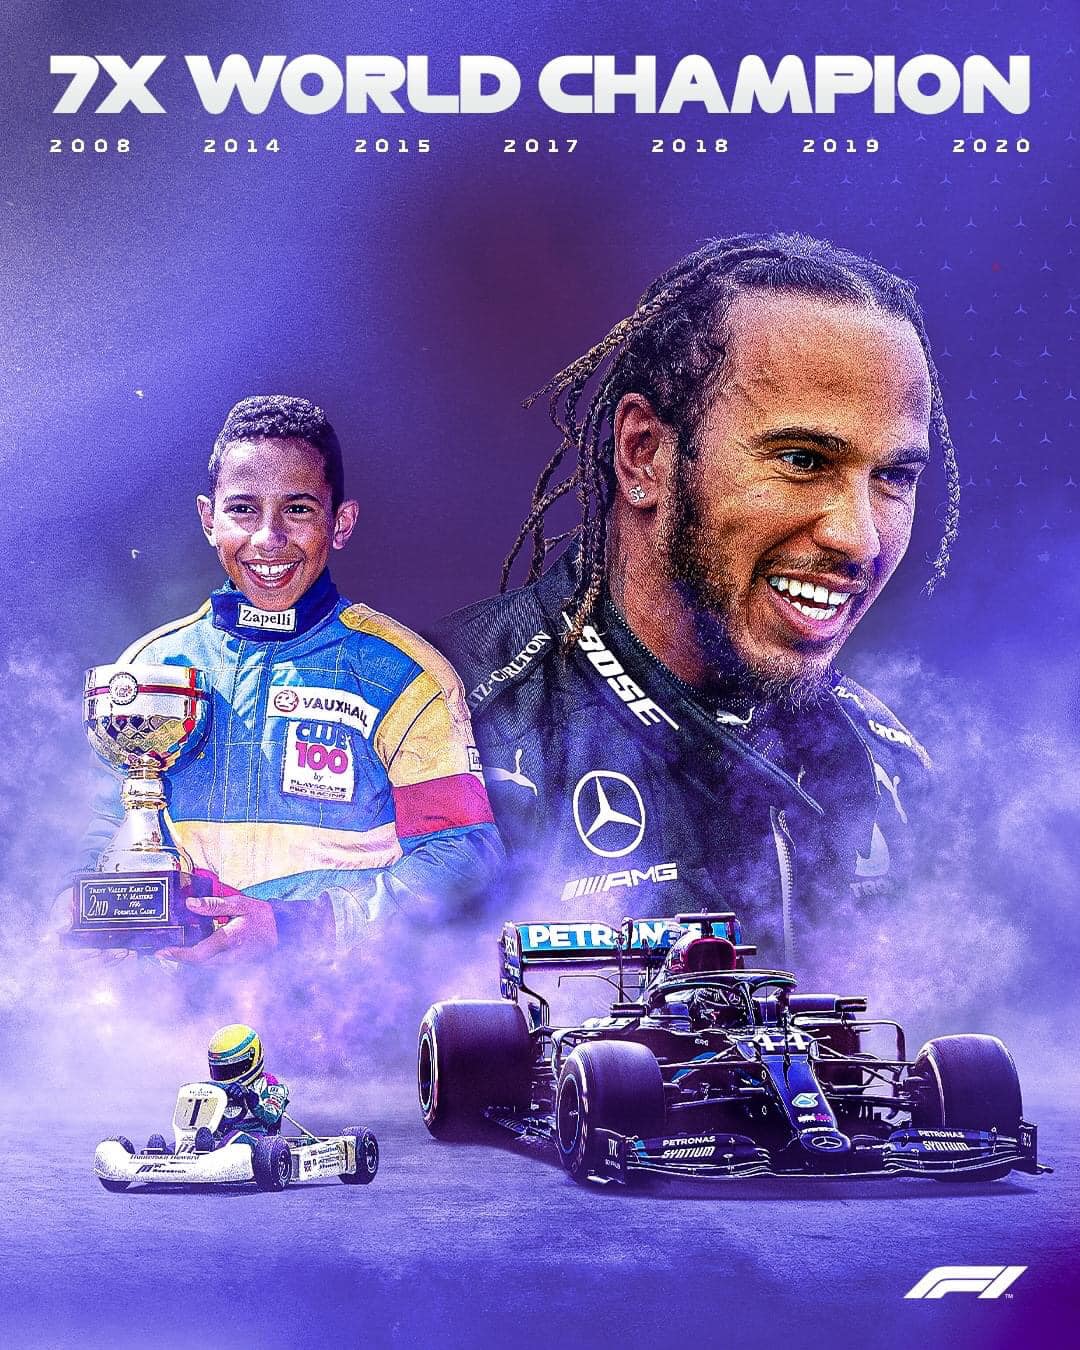 Lewis Hamilton vô địch F1 2020 125236193-10158061104088795-478161192243121196-o.jpg